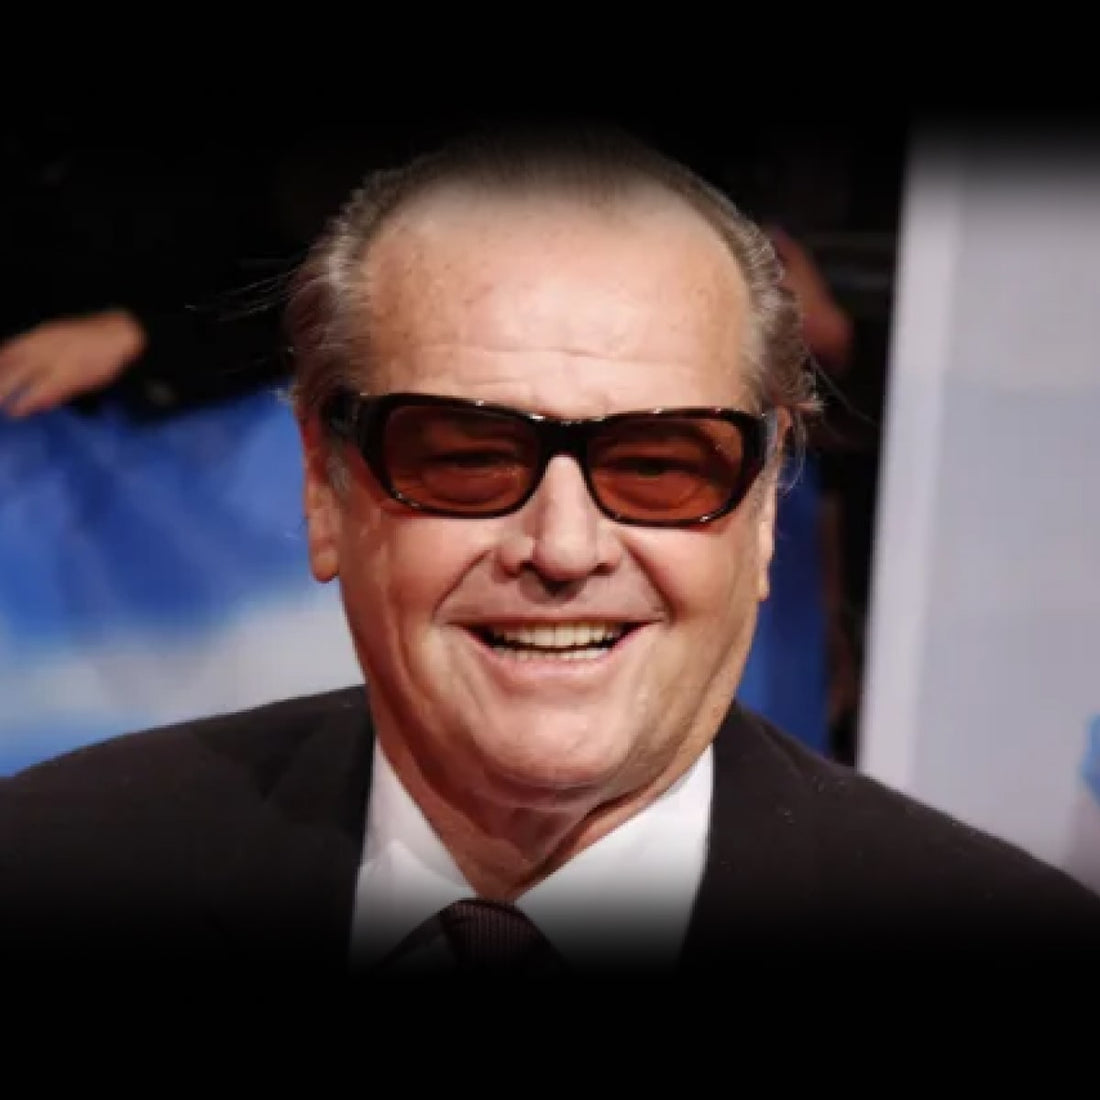 Jack Nicholson Net Worth